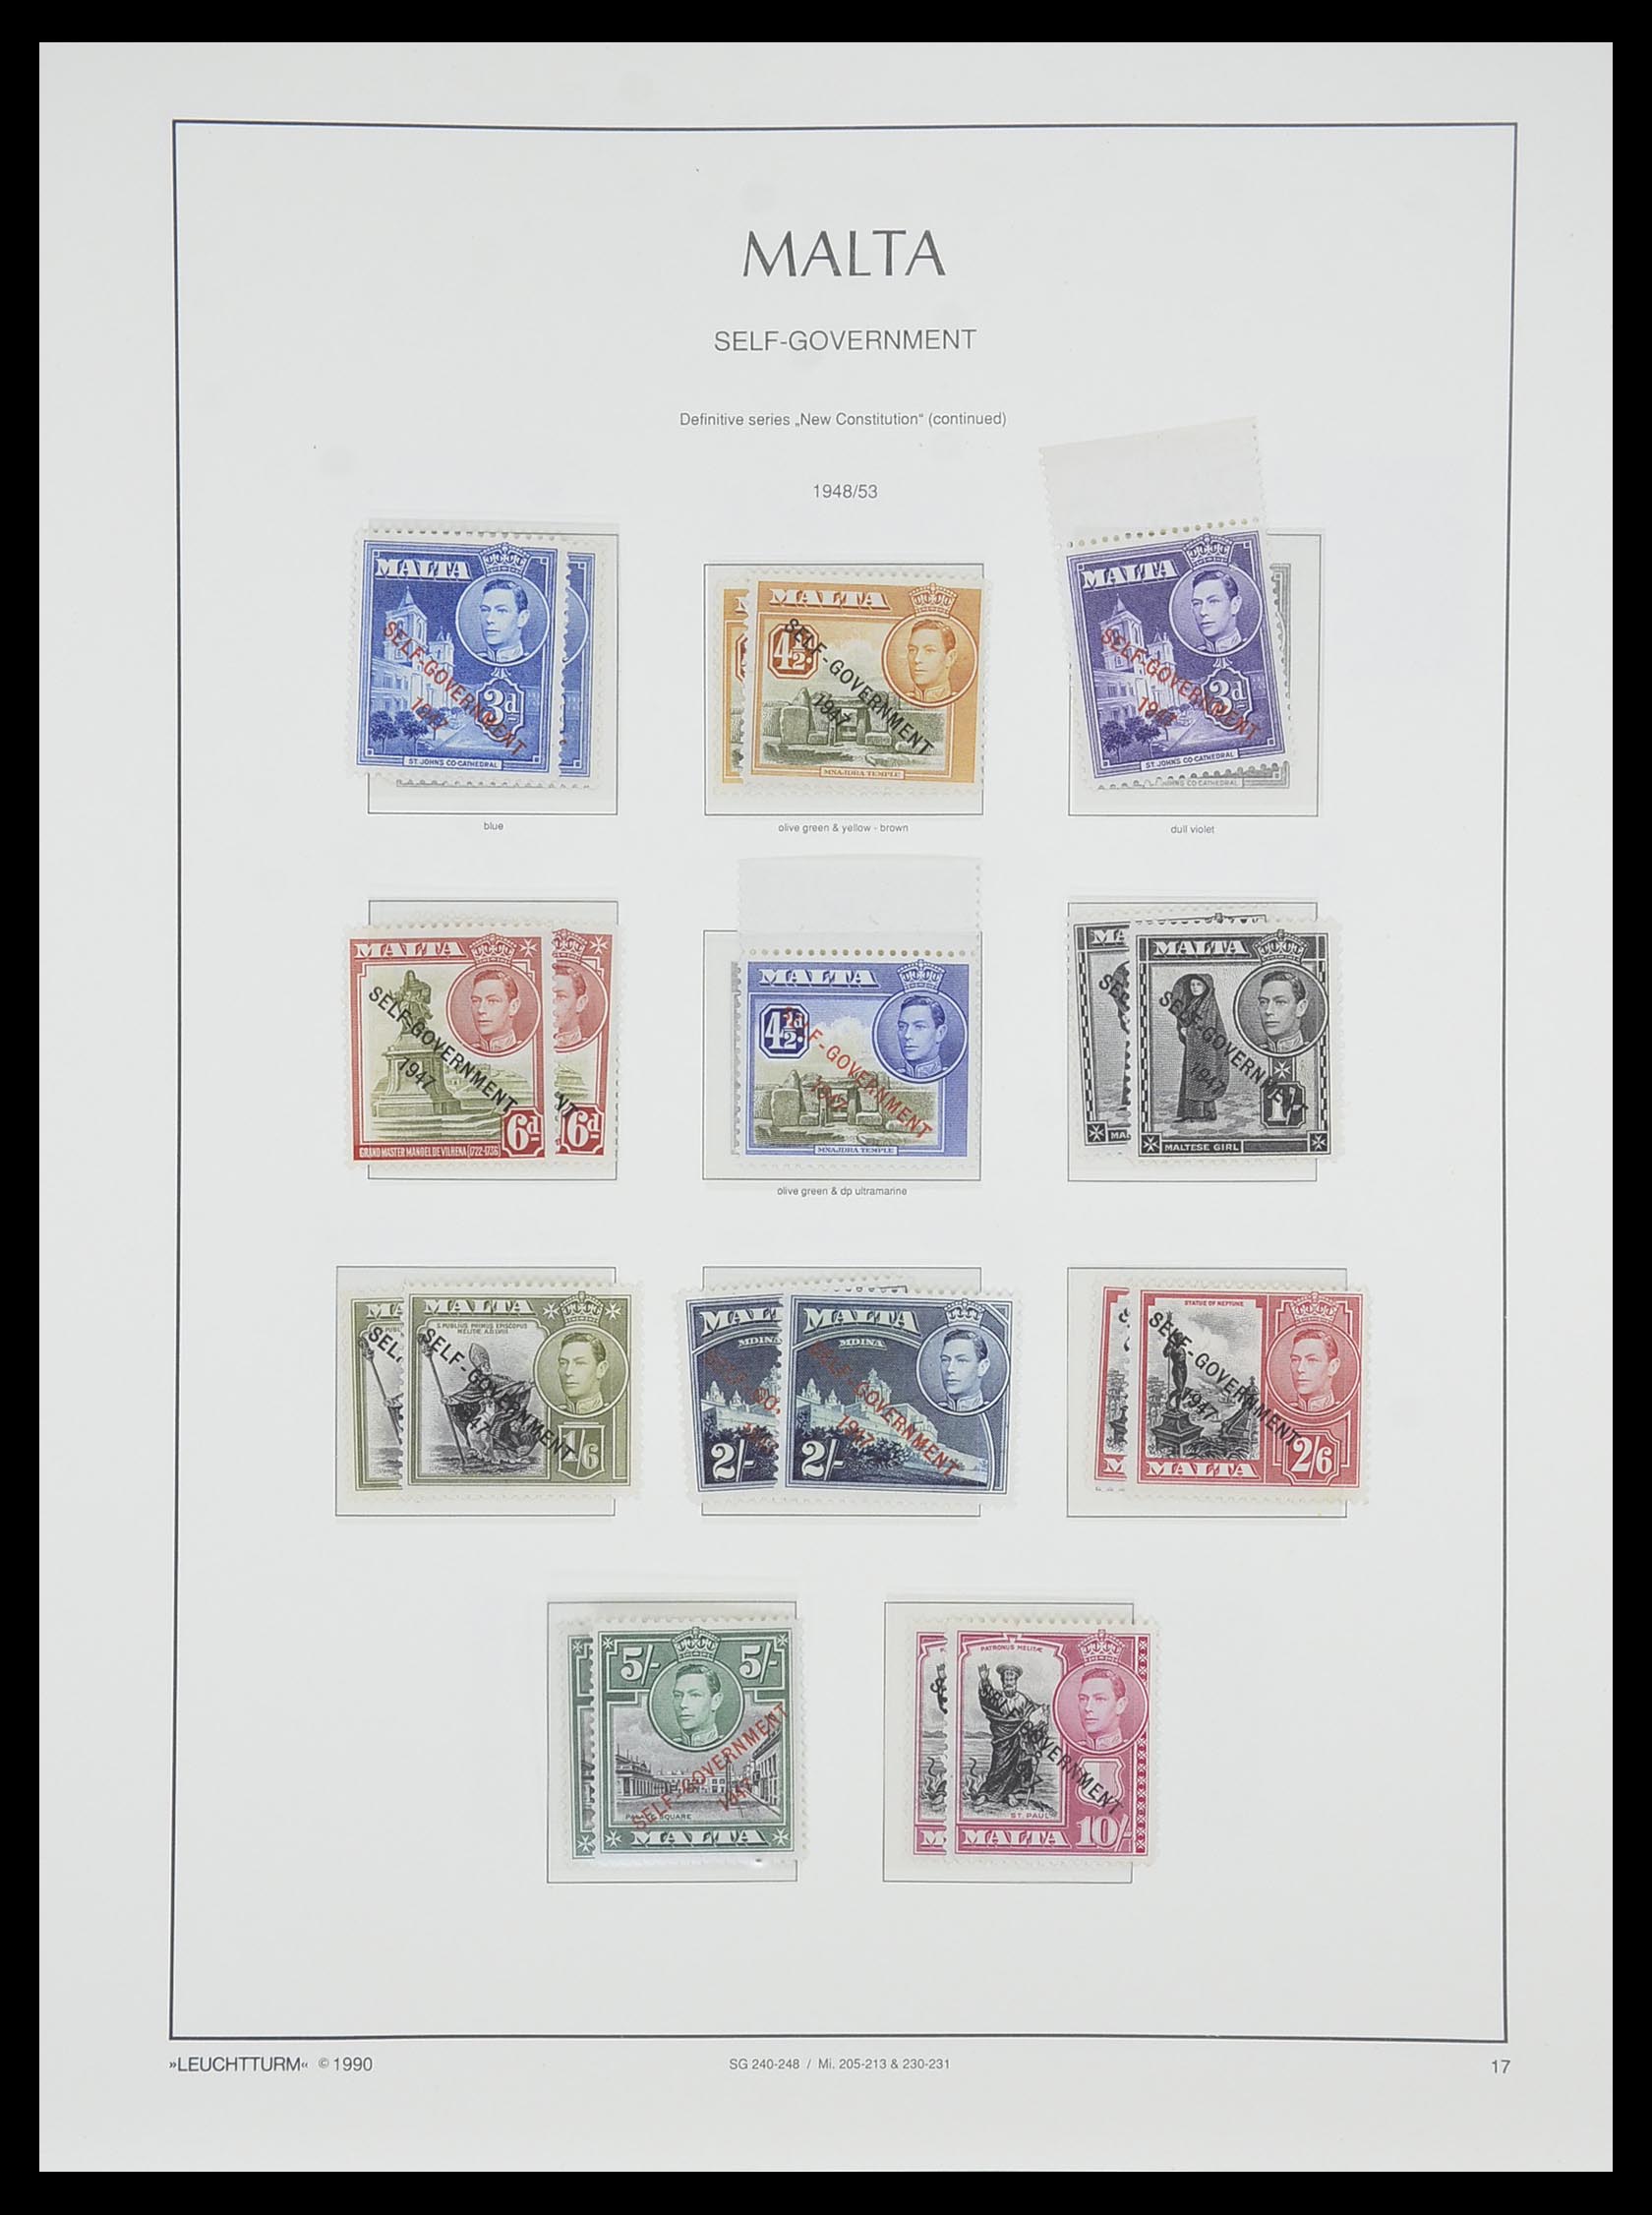 33968 019 - Stamp collection 33968 Malta 1861-2001.